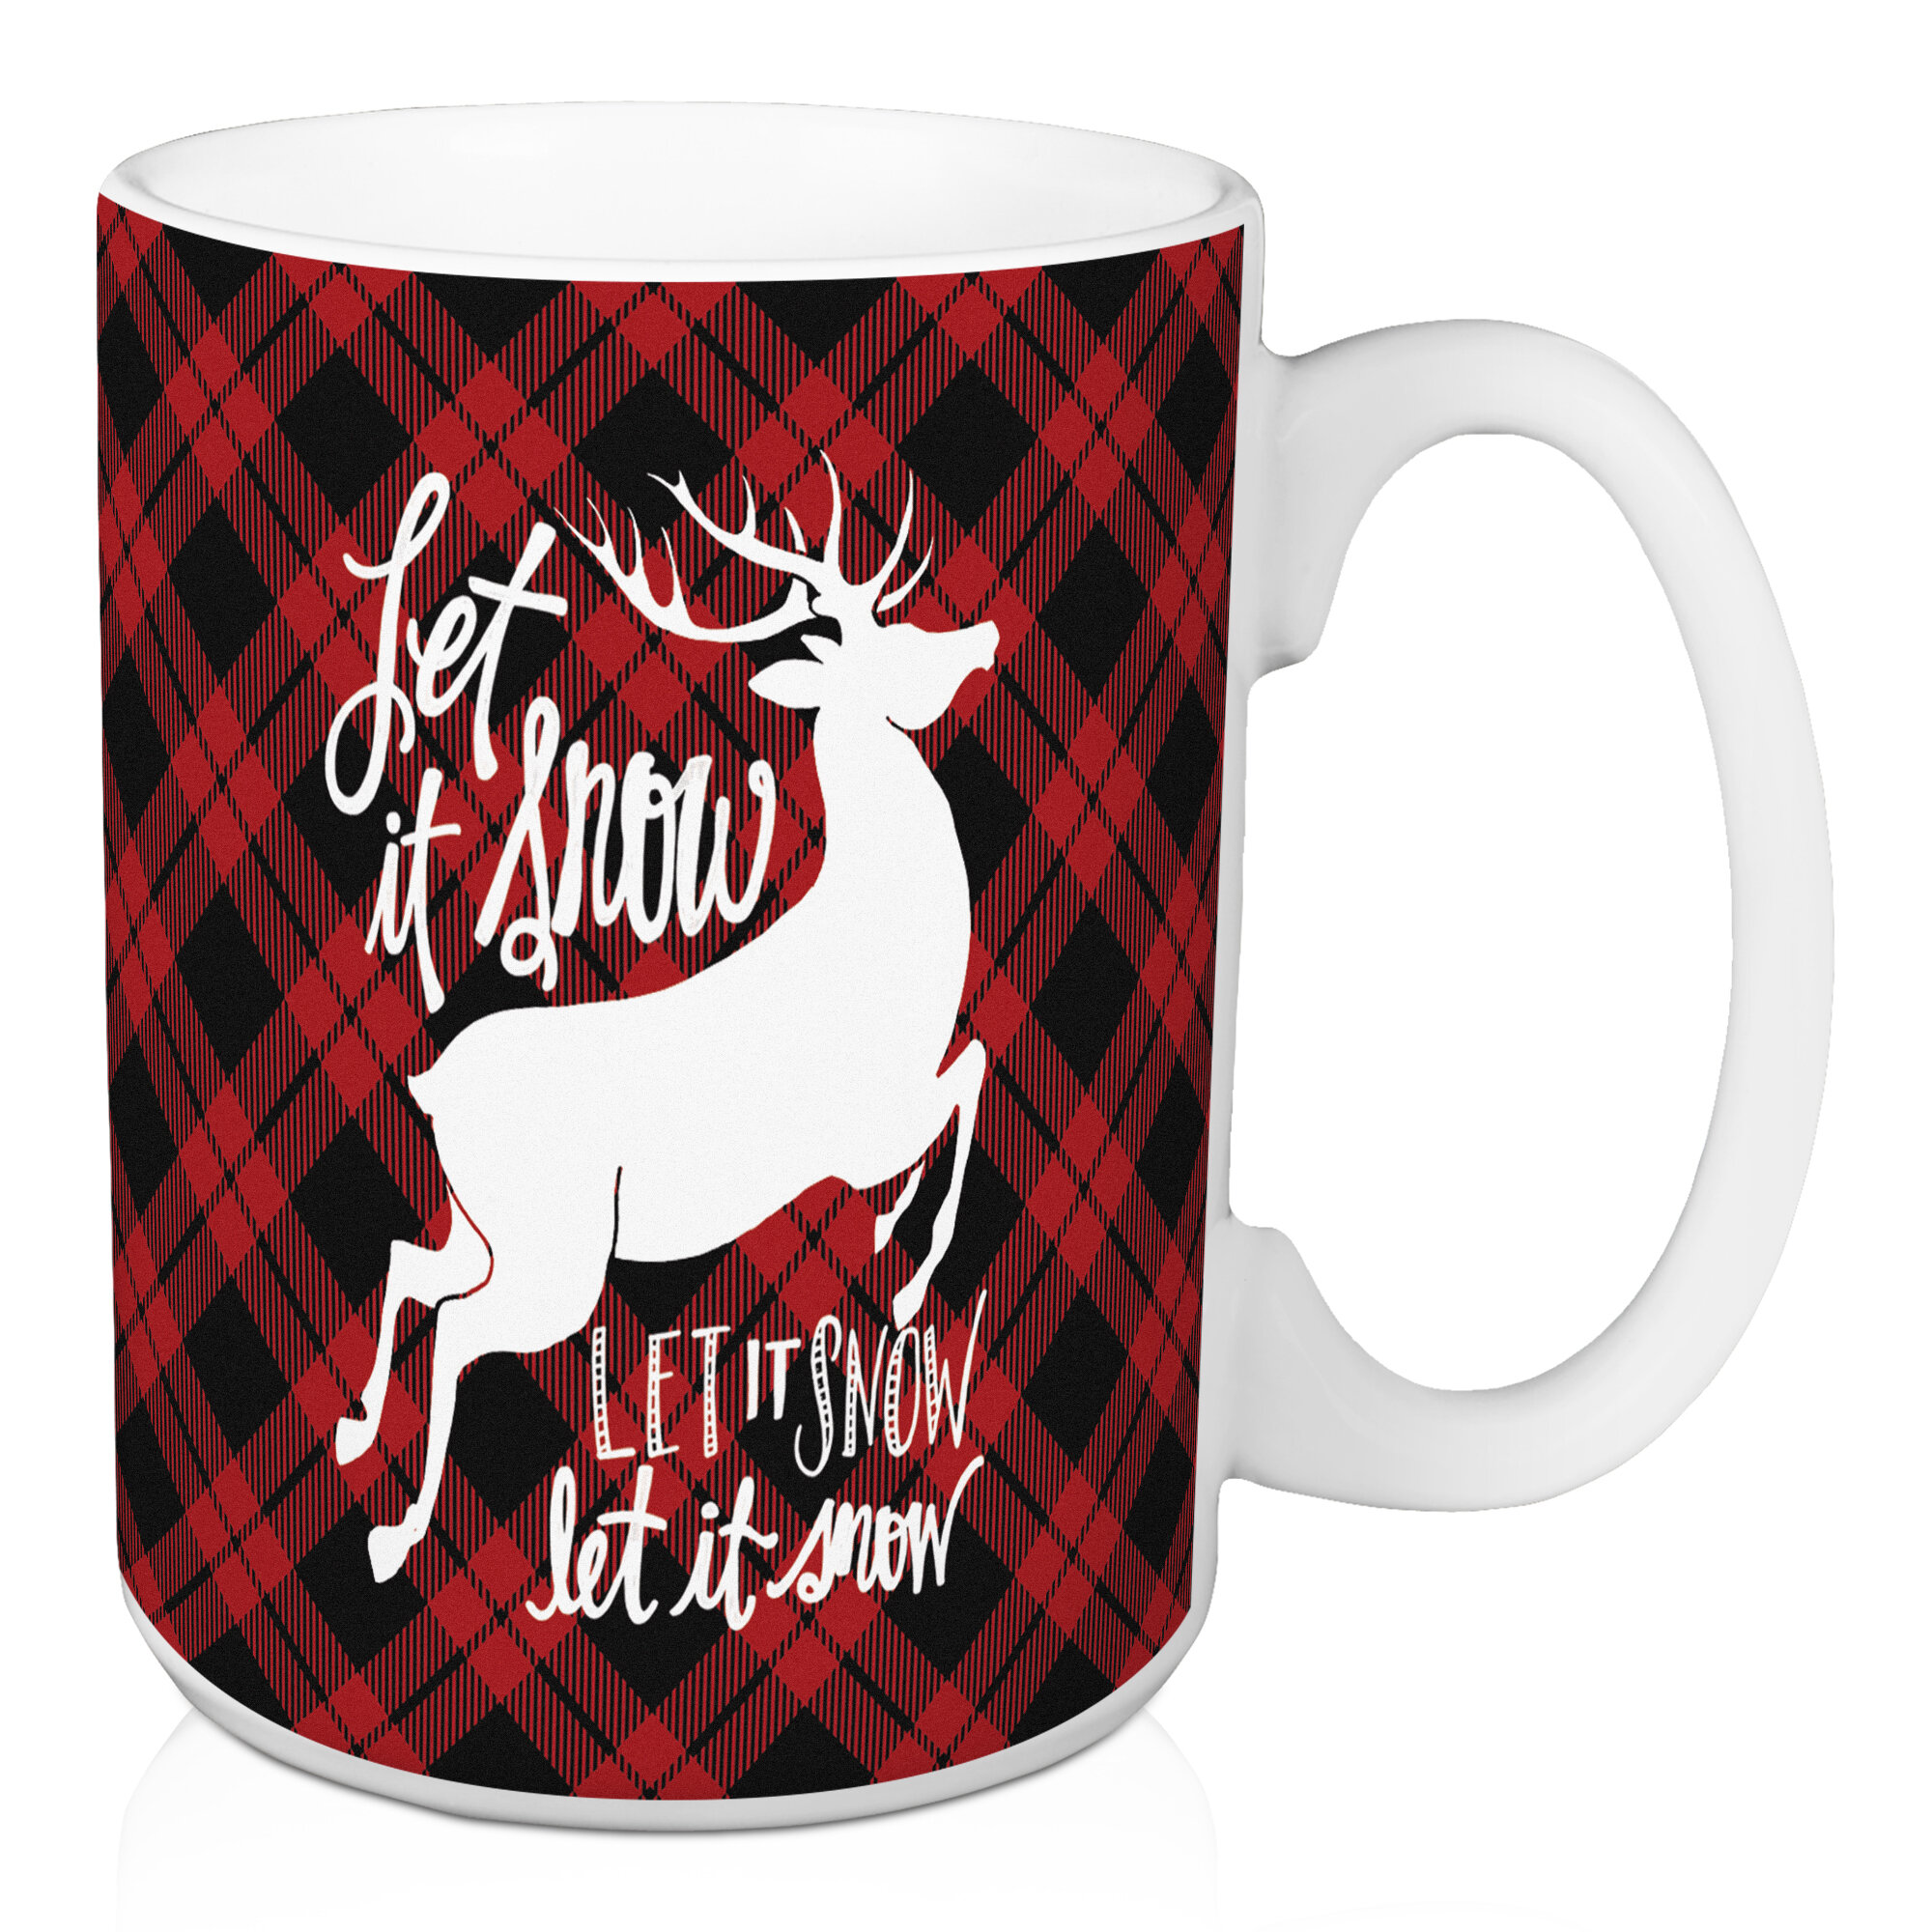 Where Do Reindeer Go for Coffee? 